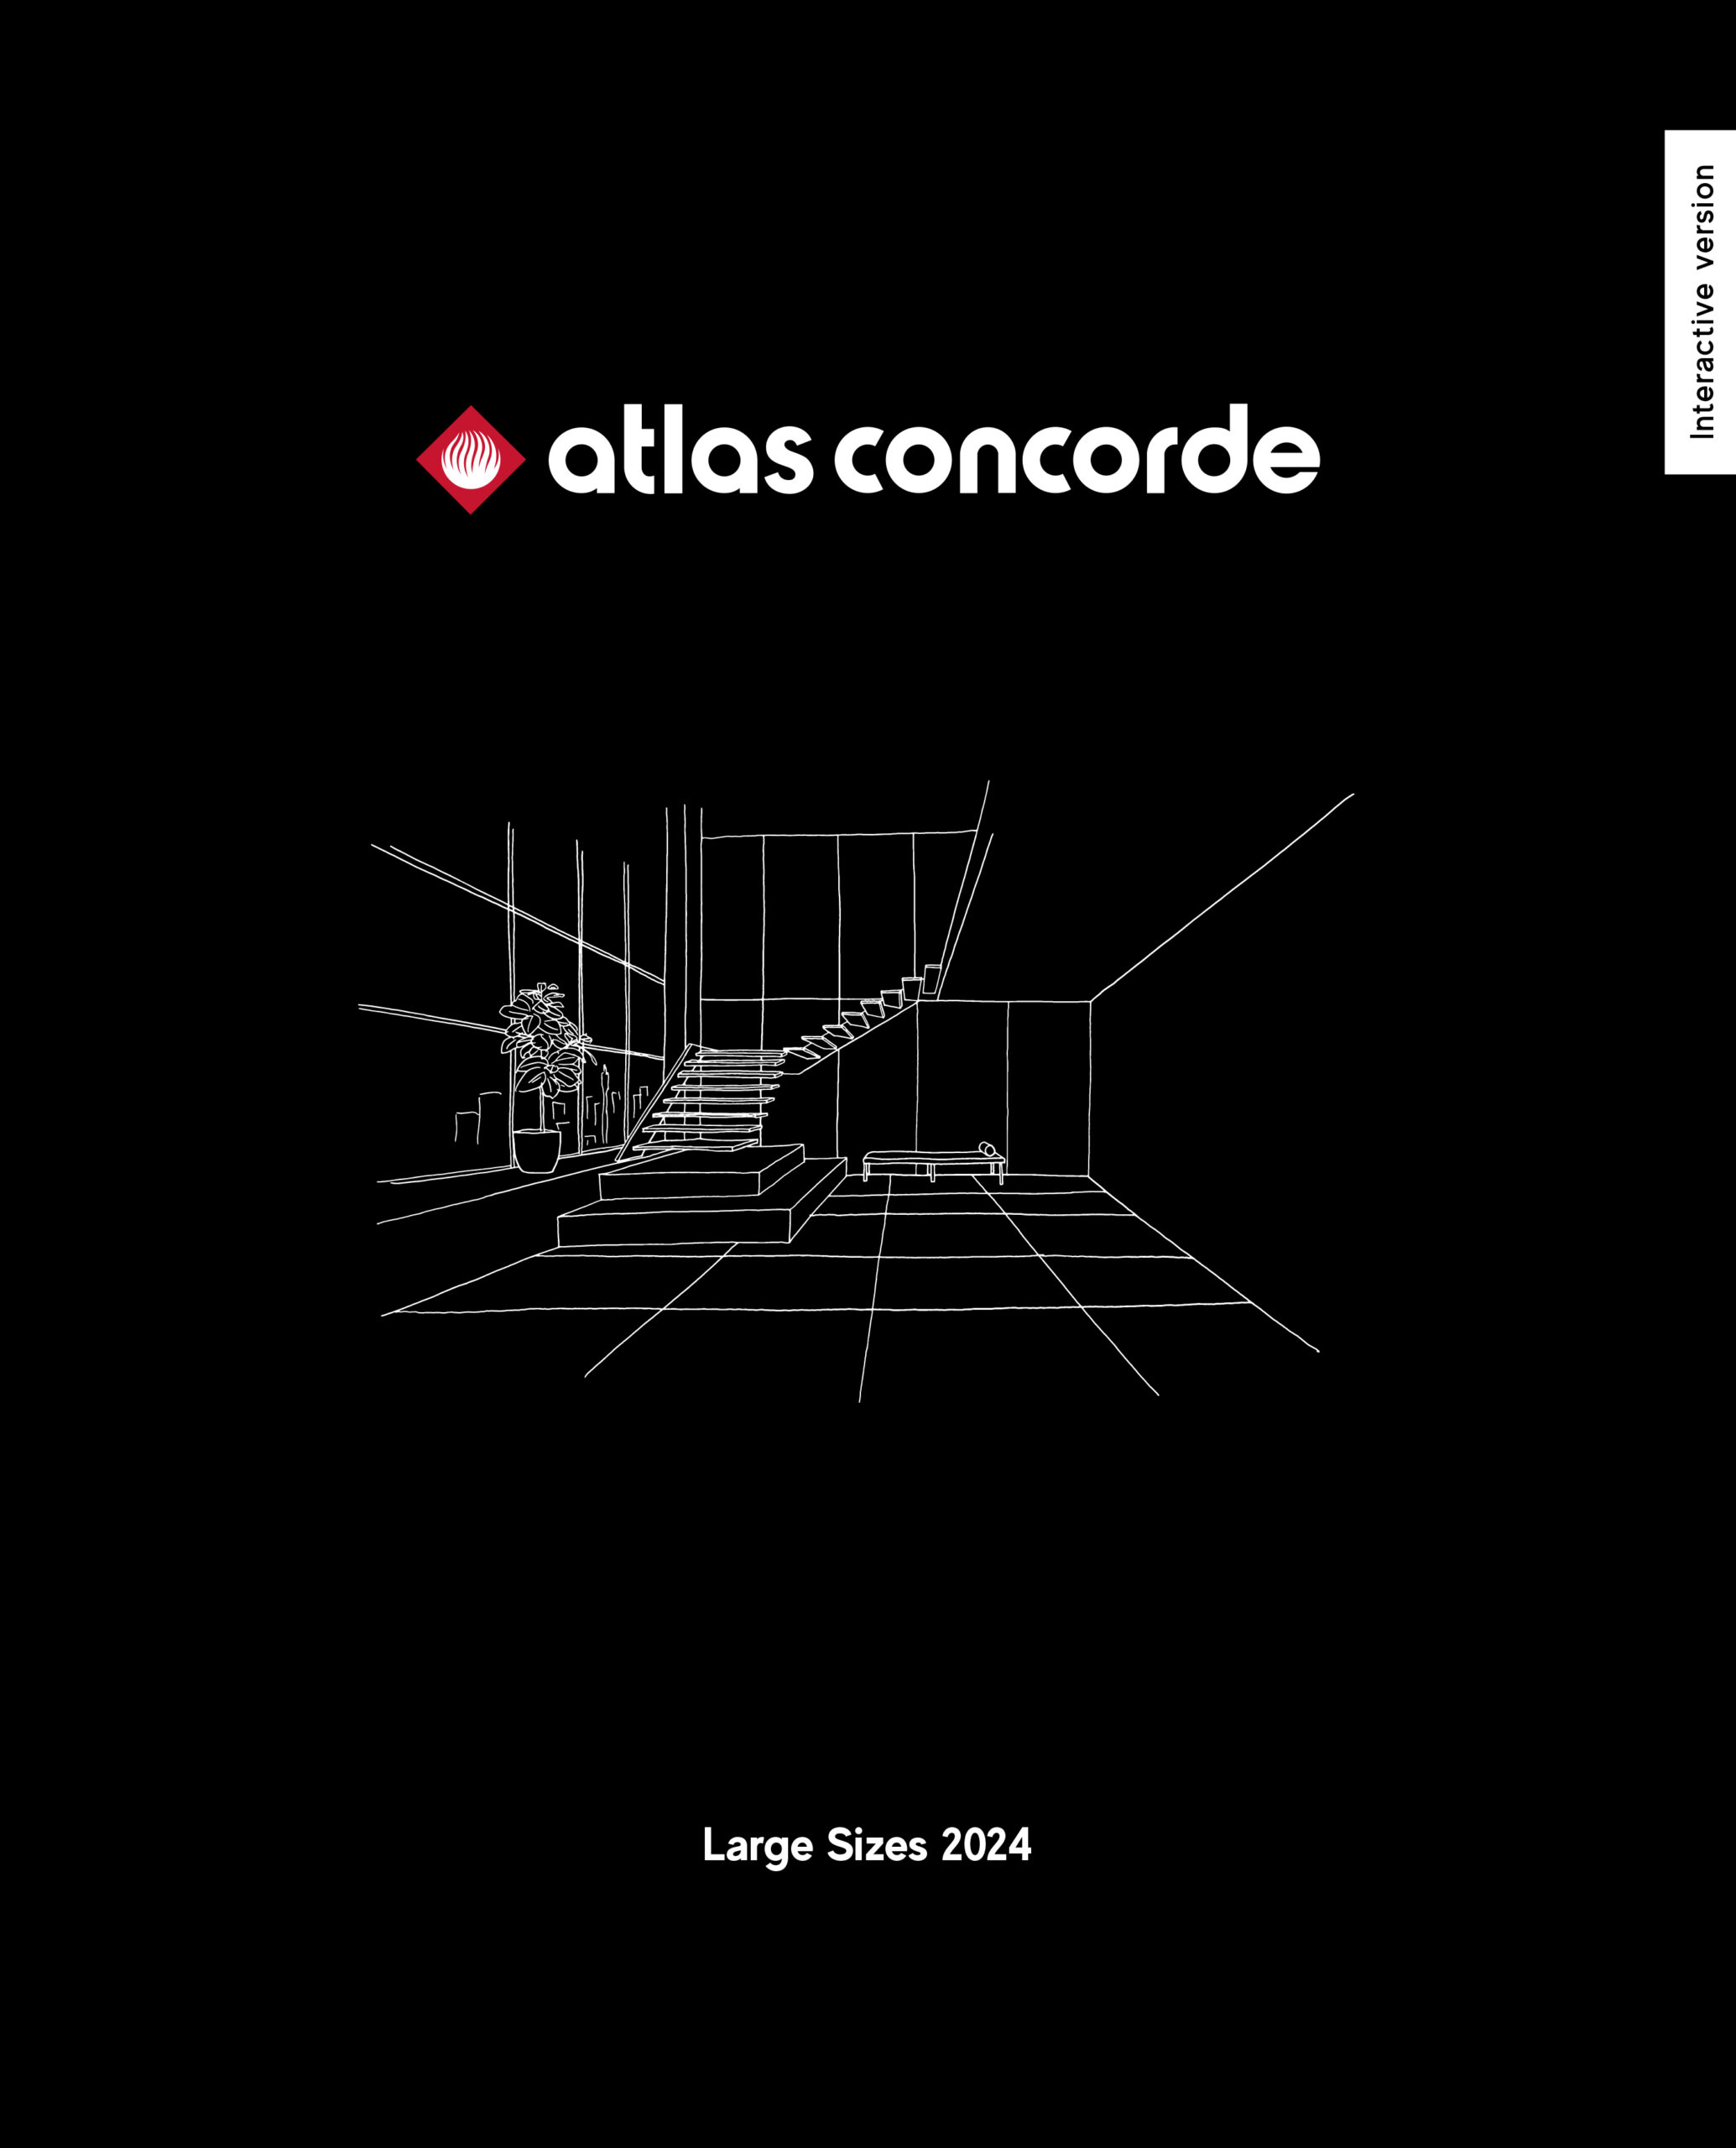 Atlas Concorde Large Sizes 2024